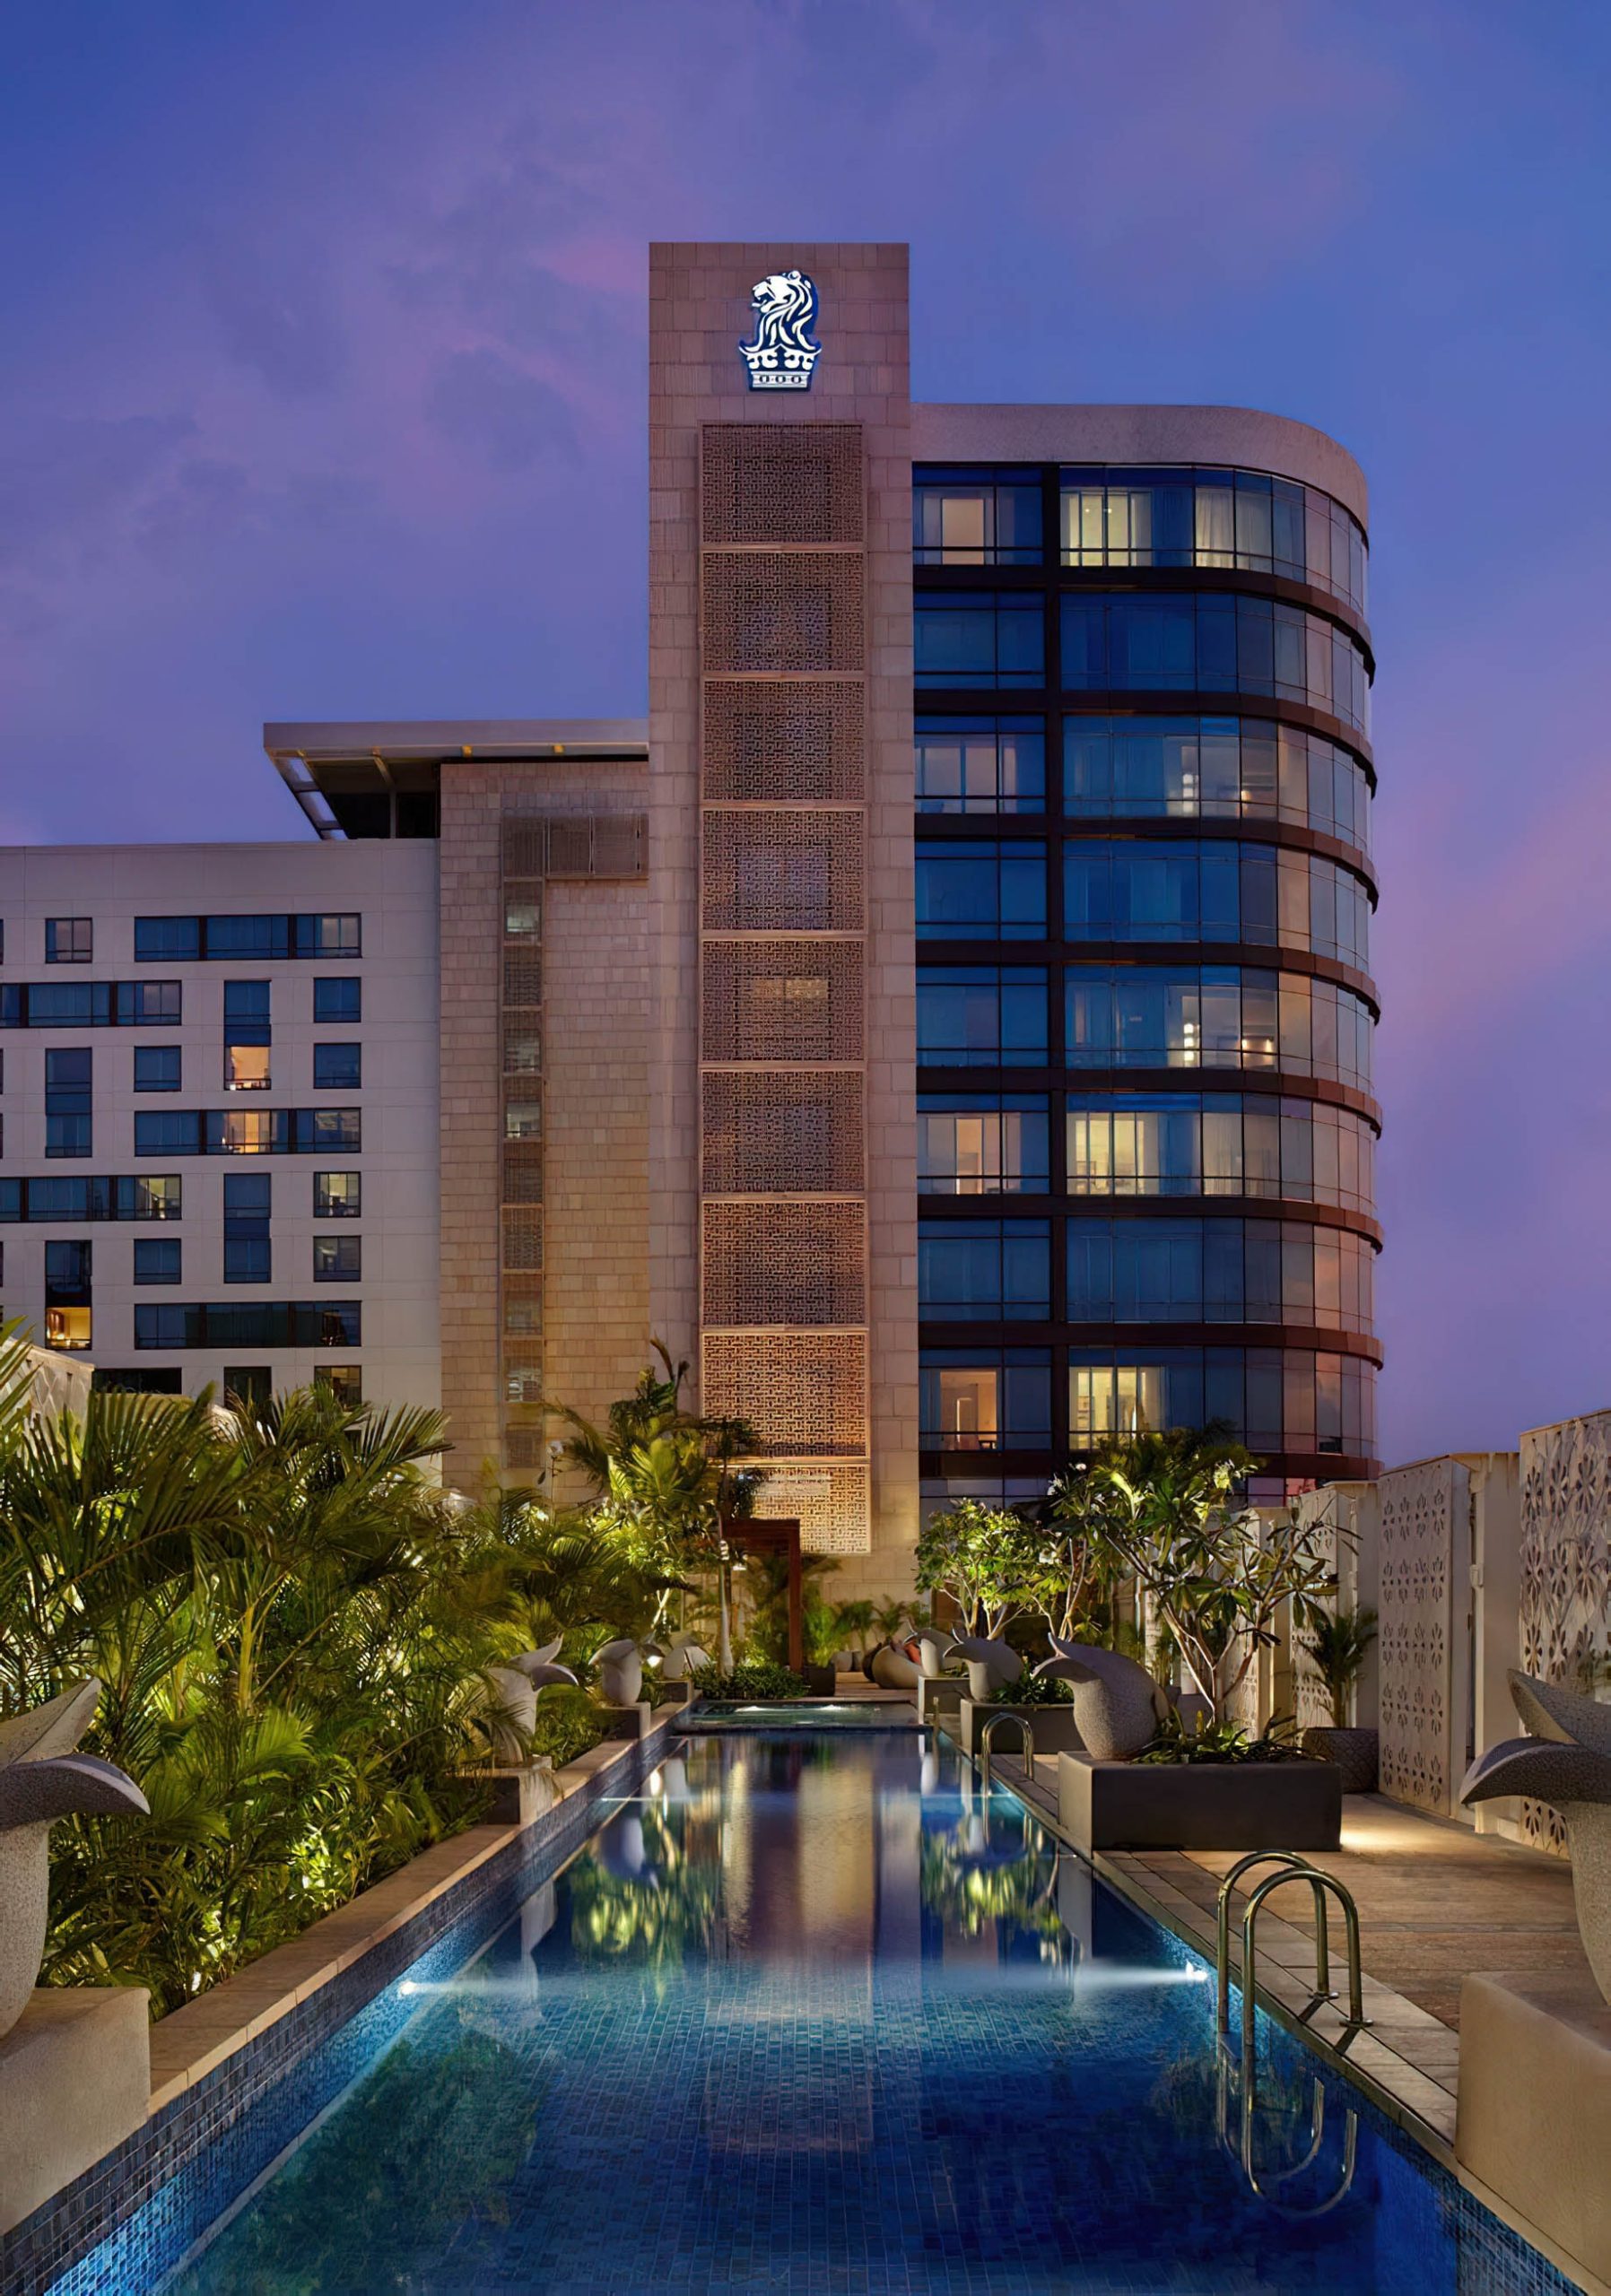 The Ritz-Carlton, Bangalore Hotel – Bangalore, Karnataka, India – Exterior Pool Twilight View